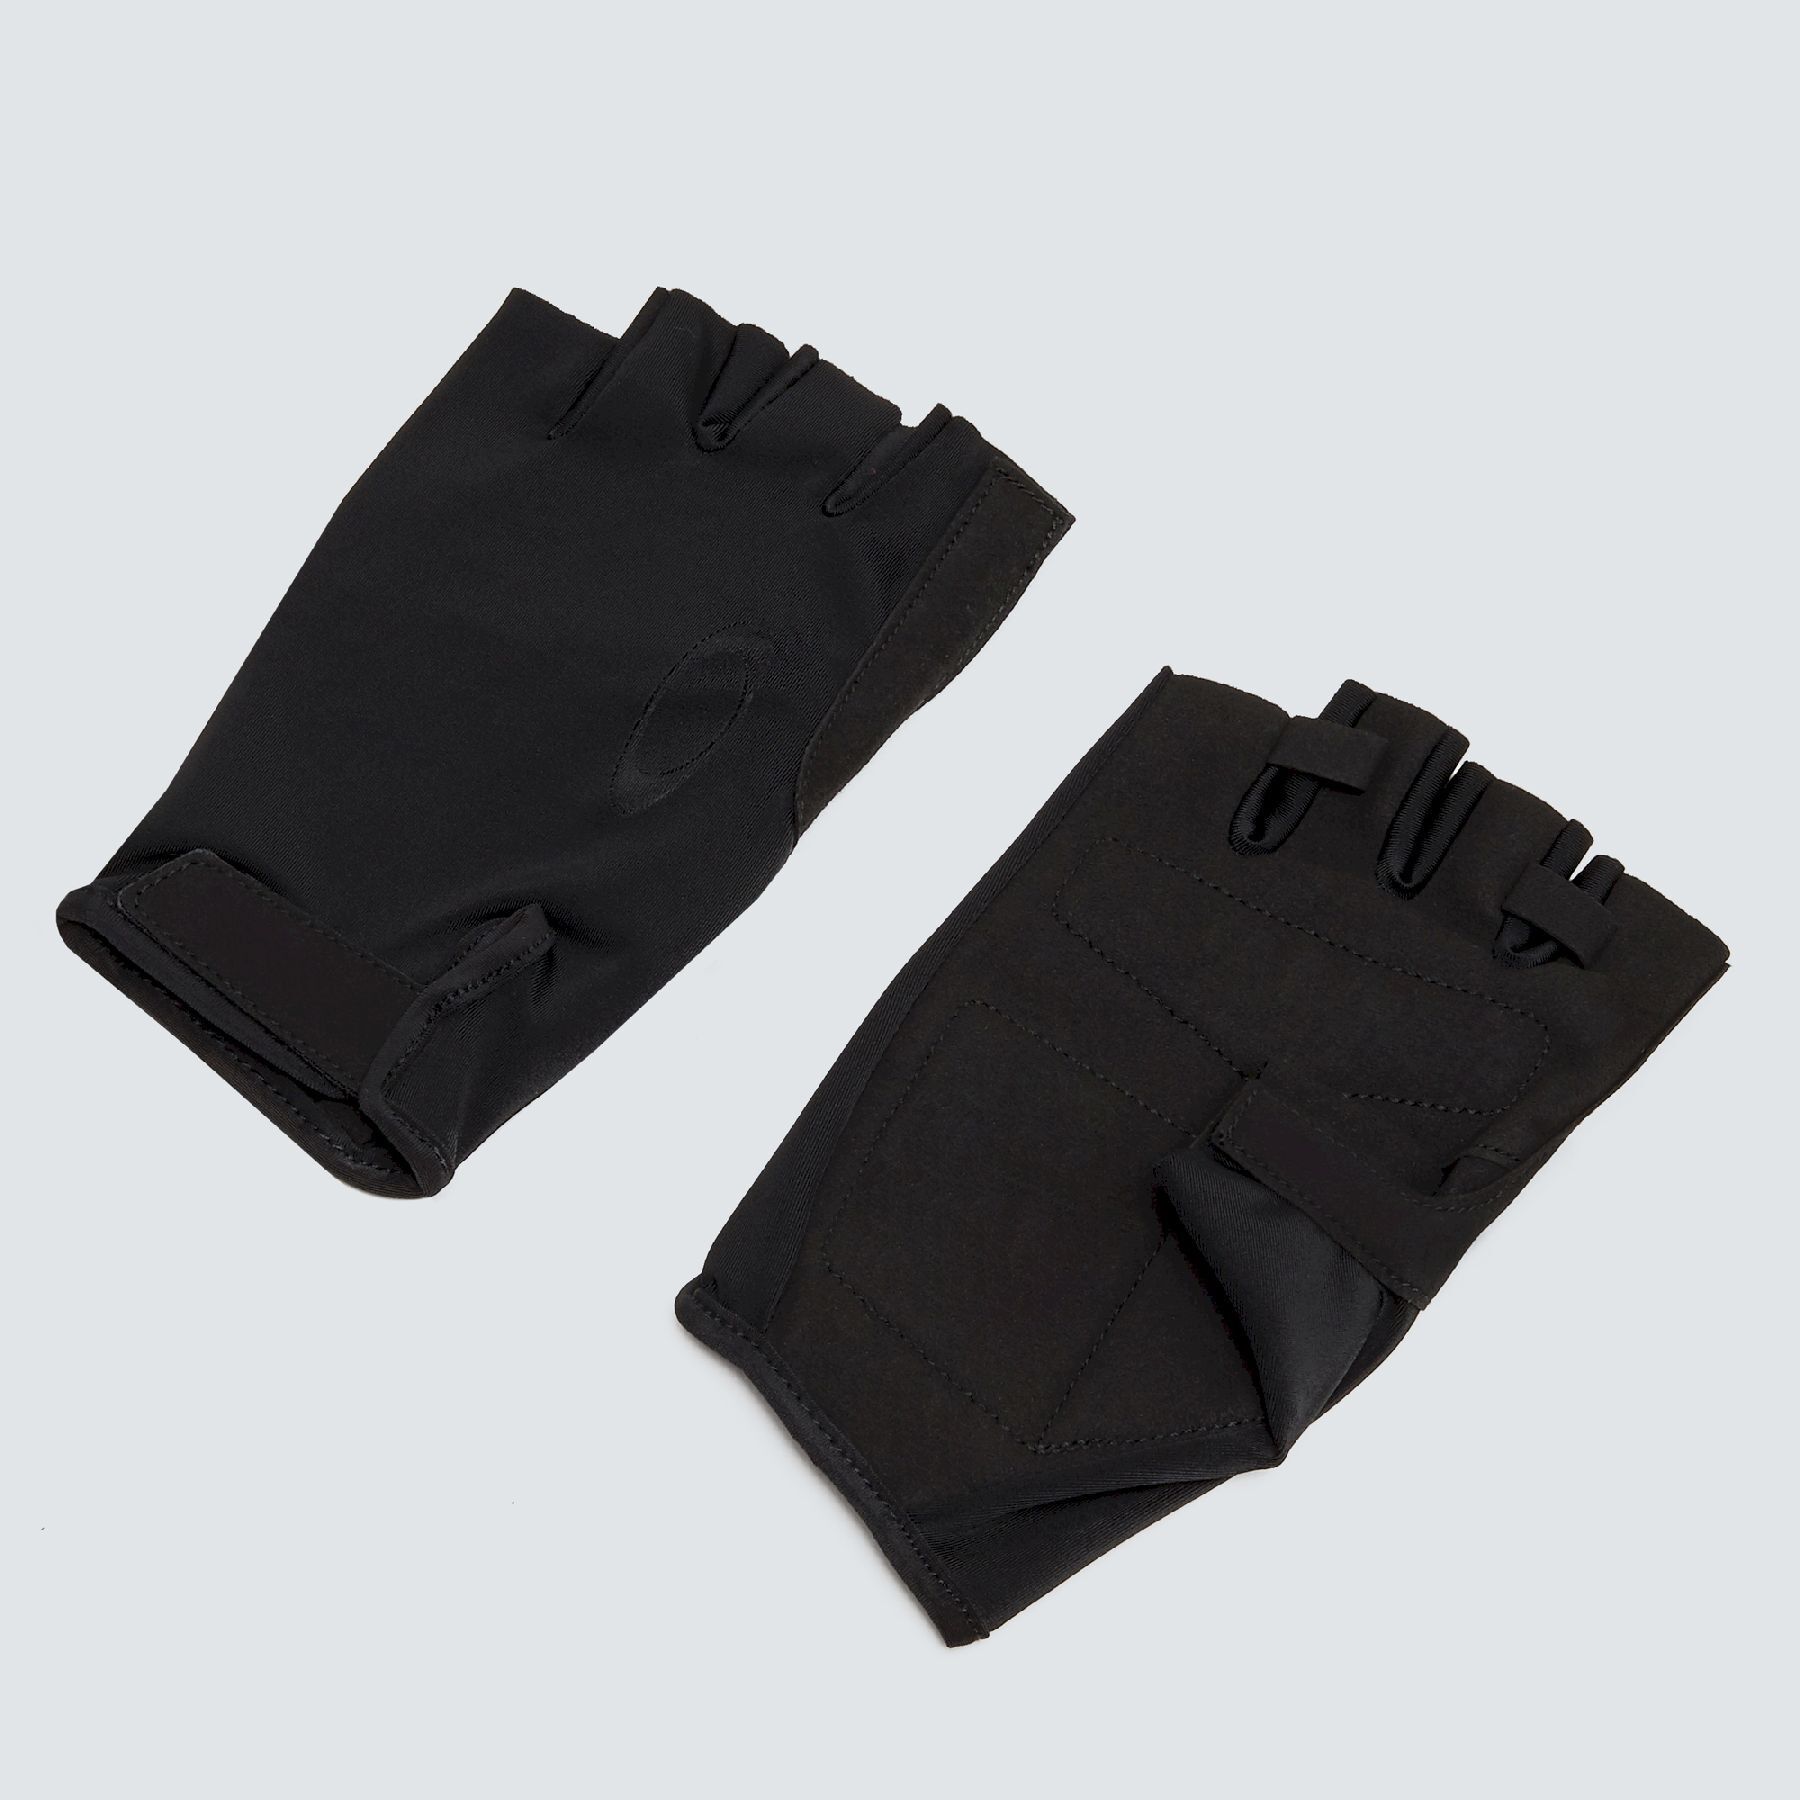 Oakley Mitt / Gloves 2.0 - Cycling gloves